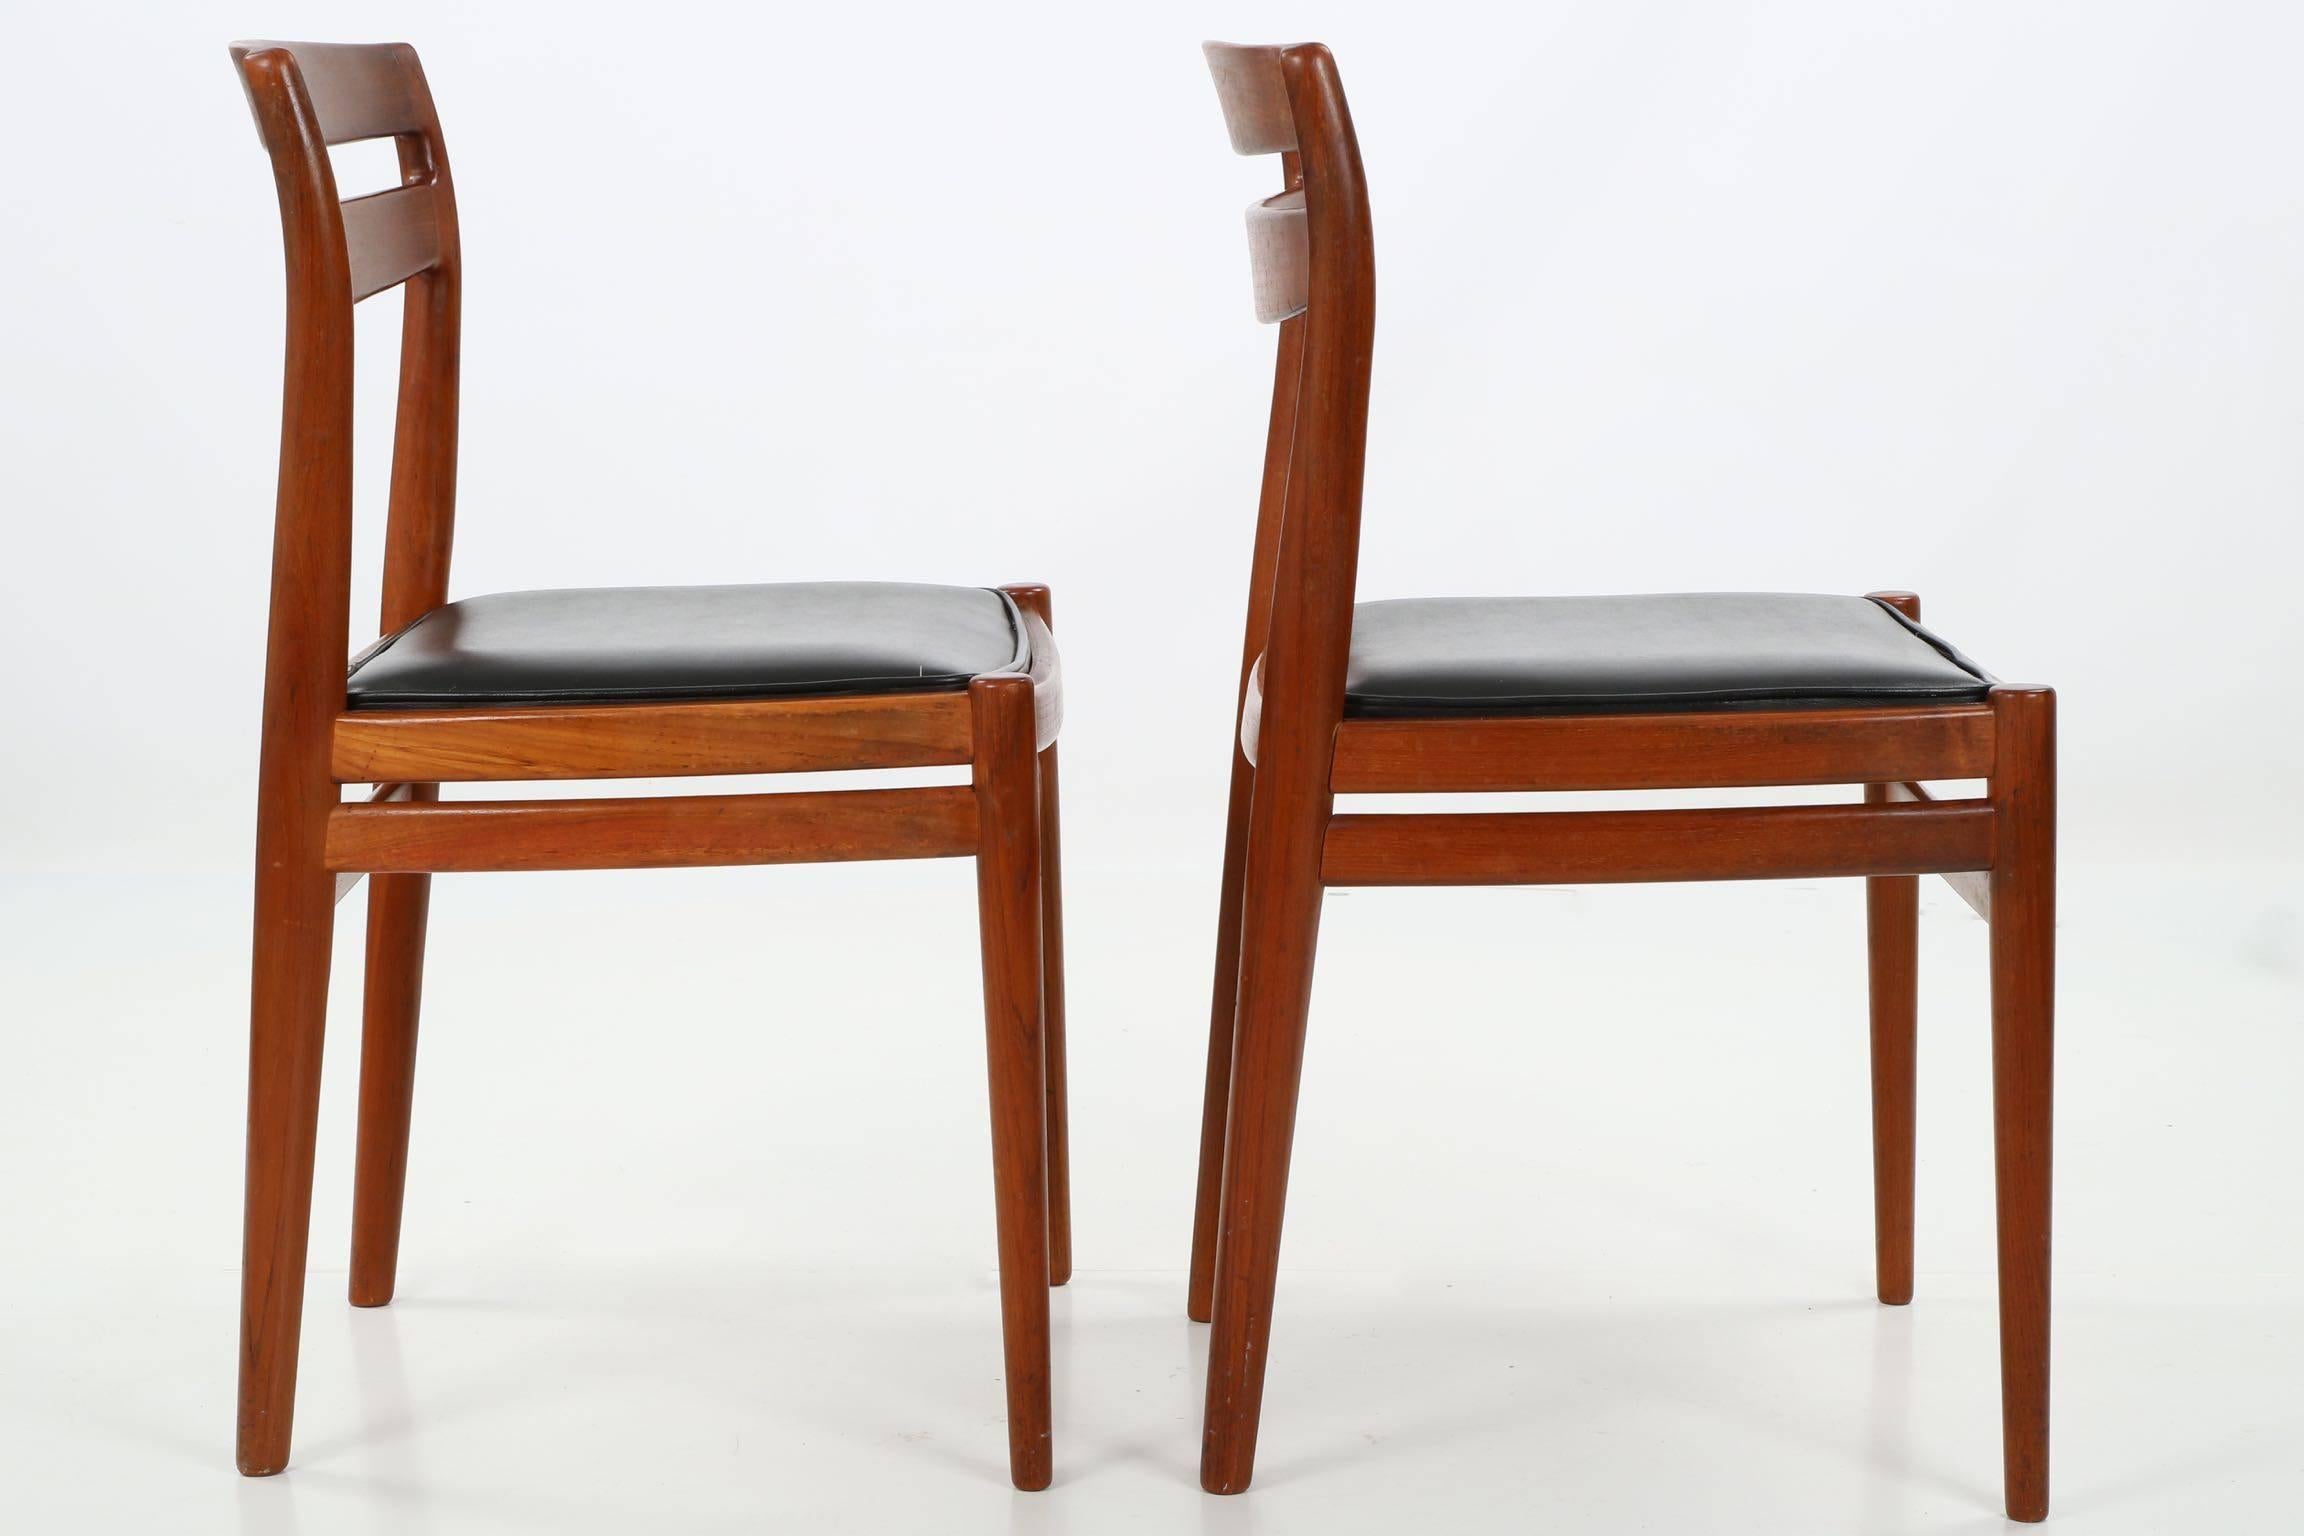 20th Century Four Danish Mid-Century Modern Teakwood Side Chairs, Retailed by Leo Spivak Inc.